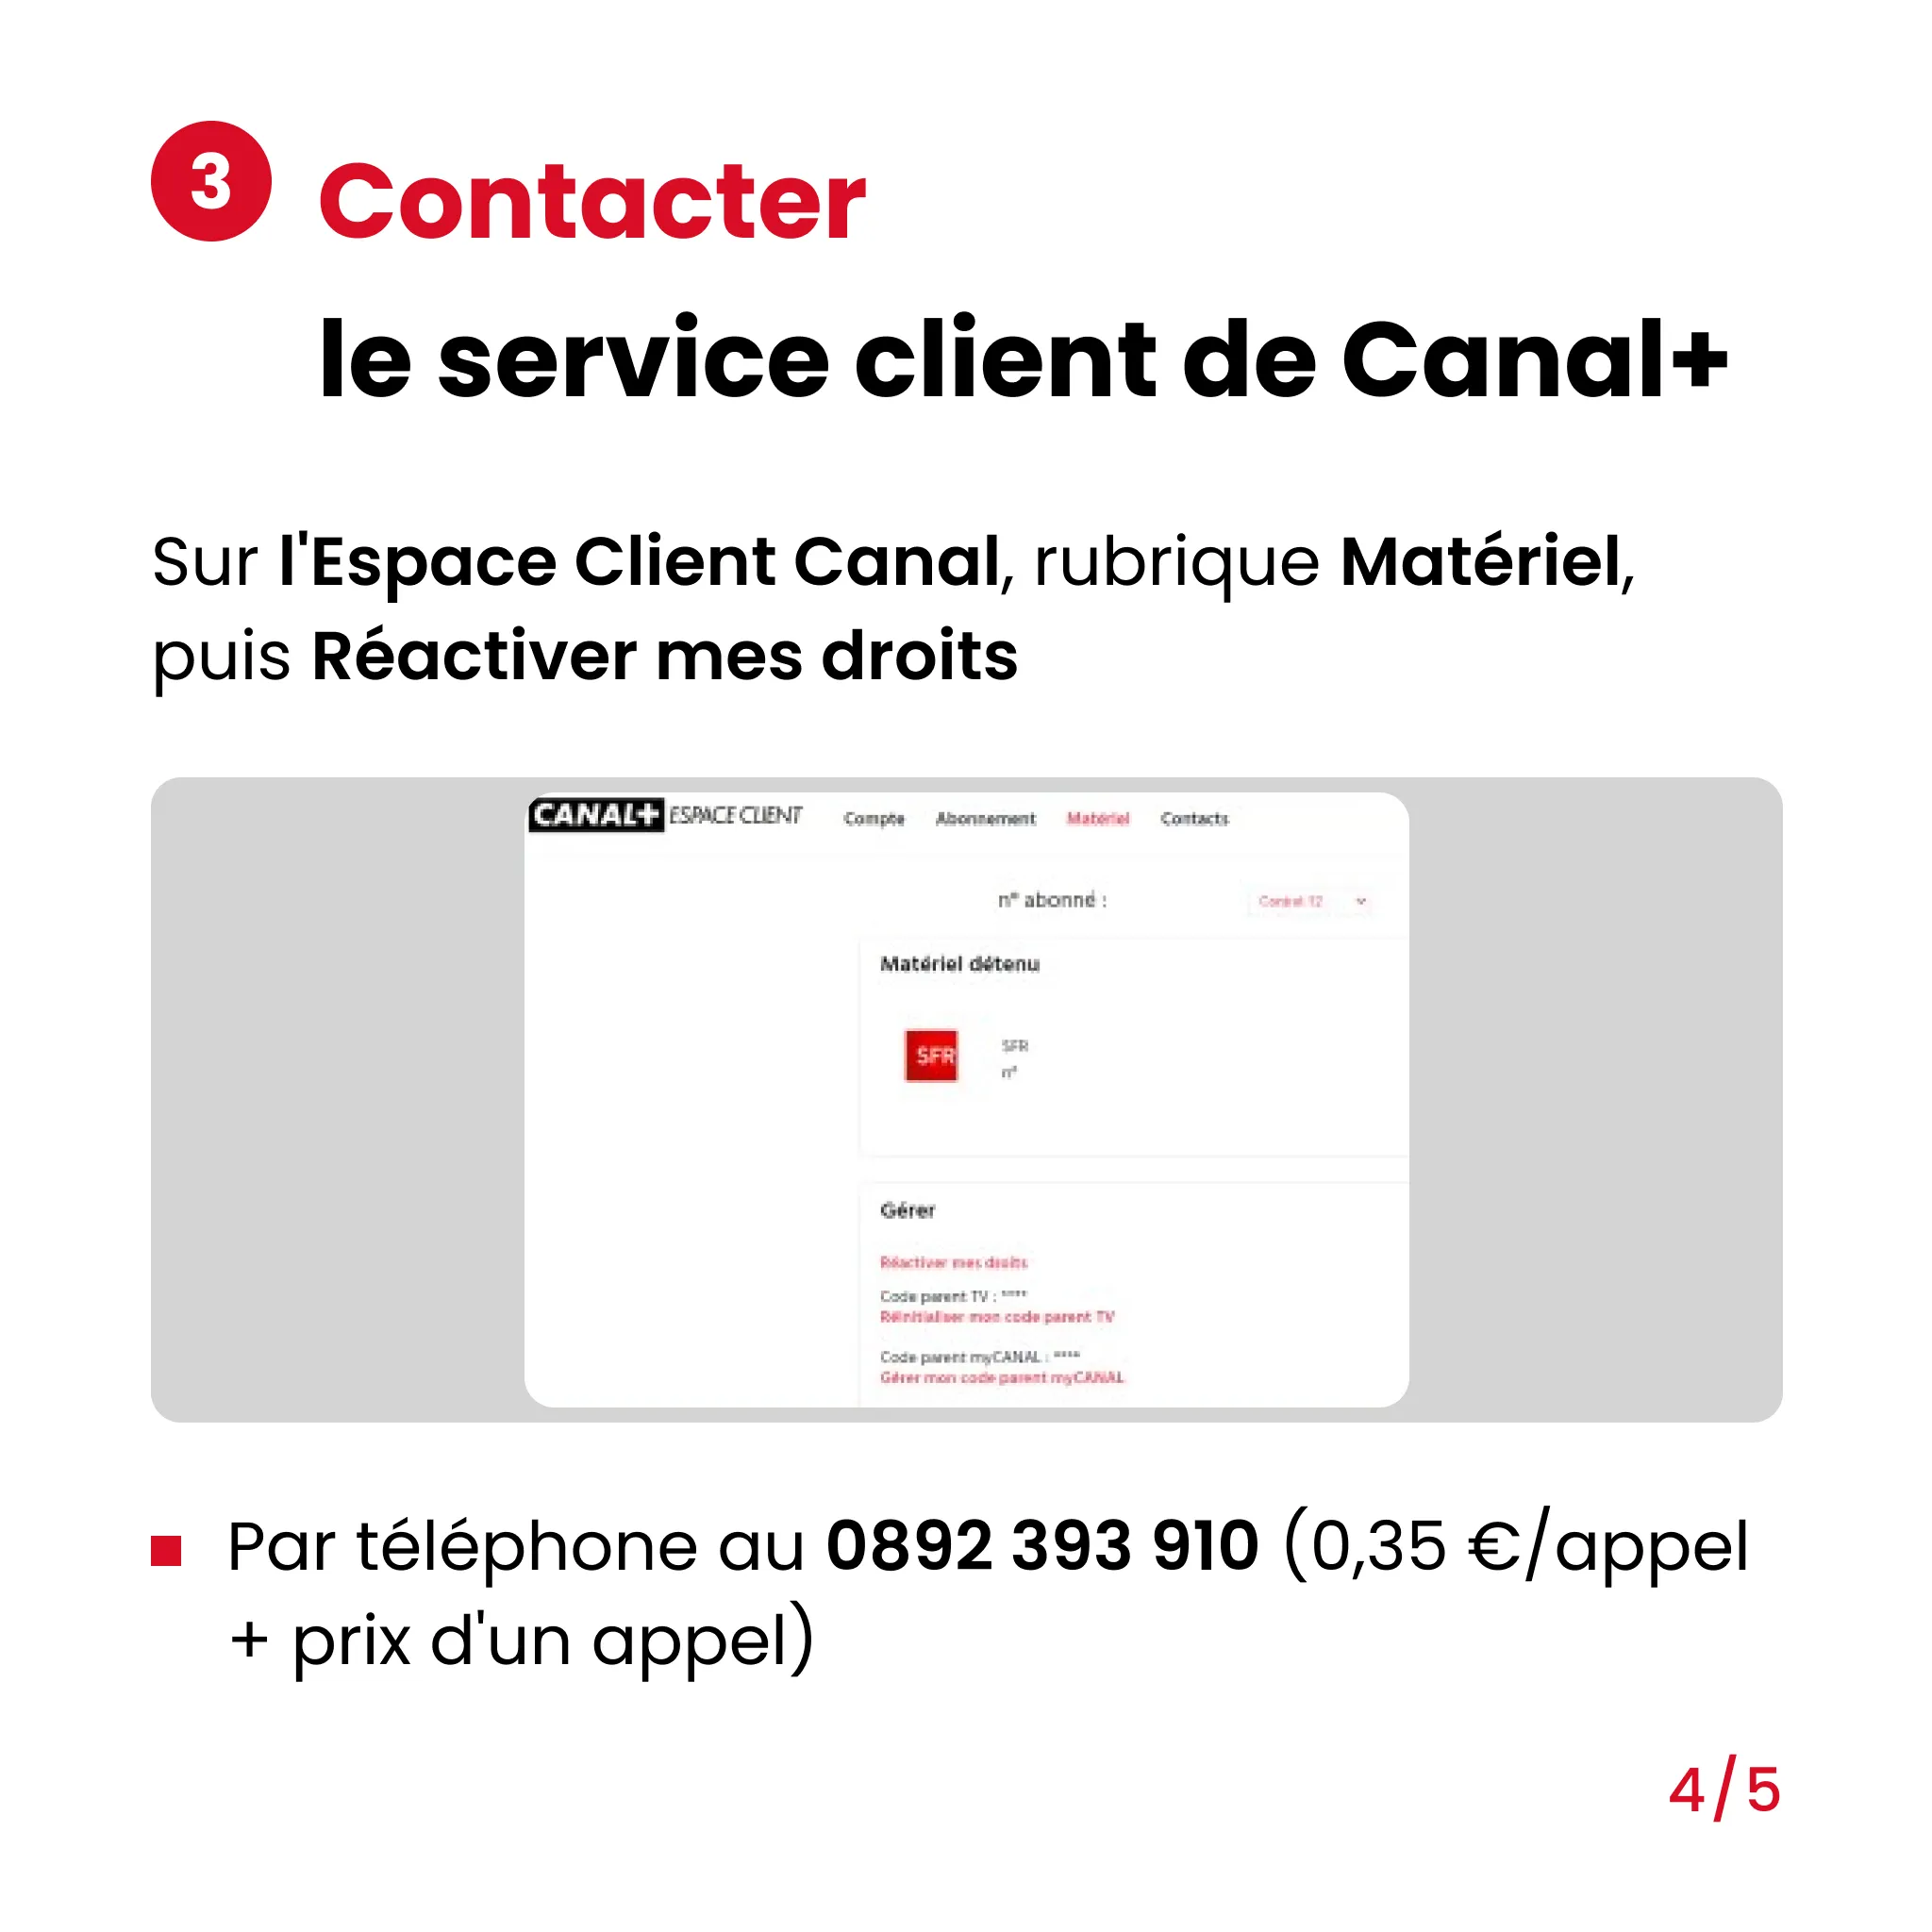 contacter le service client canal +